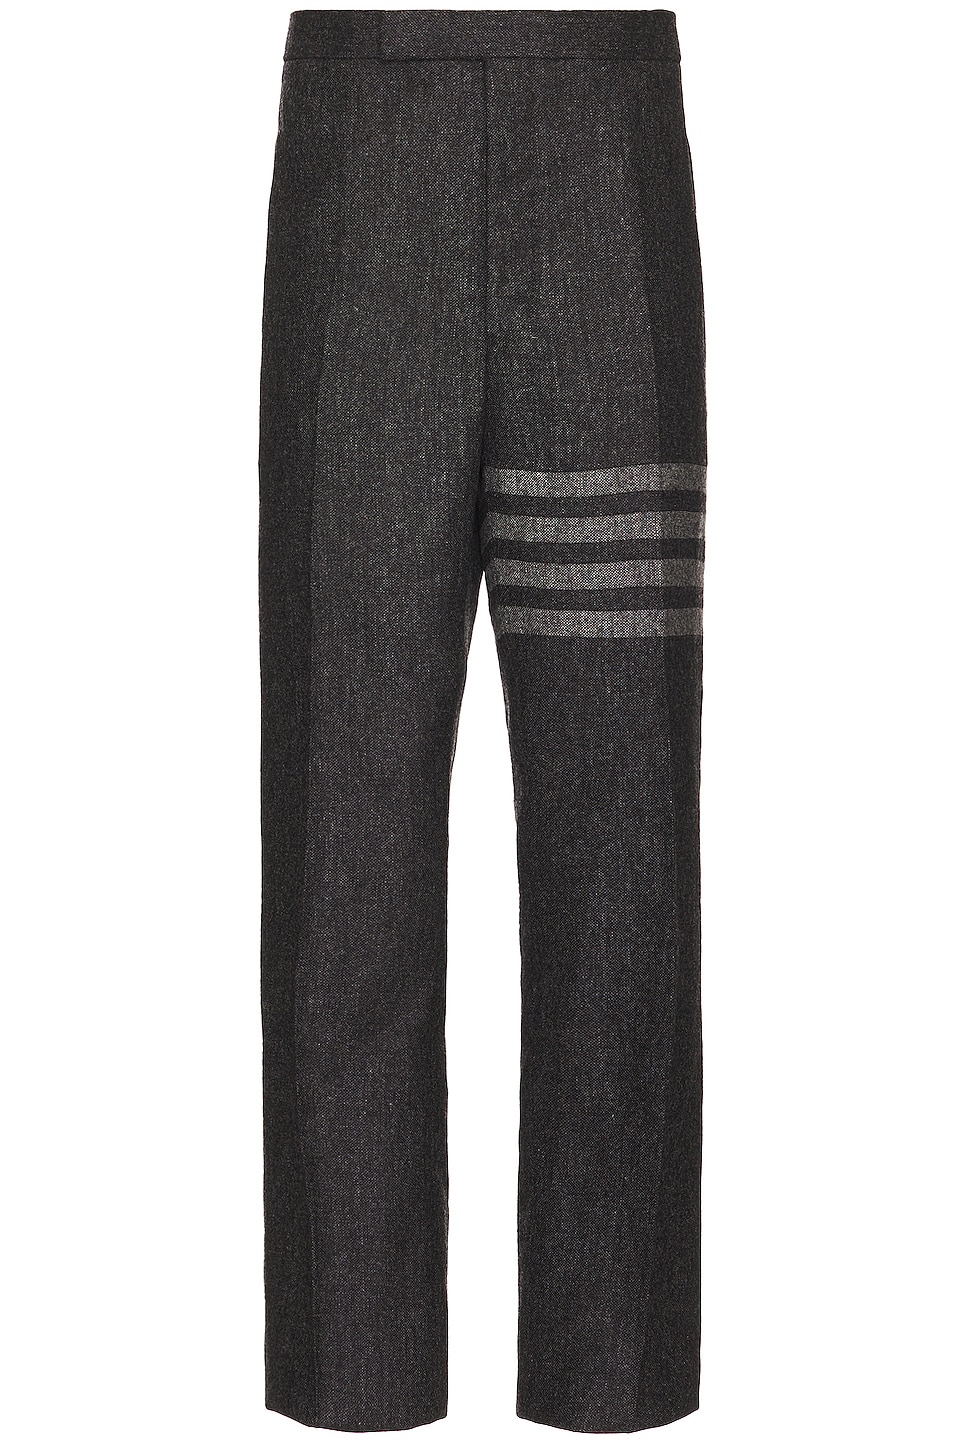 Image 1 of Thom Browne Low Rise Drop Crotch Backstrap Trouser in Dark Grey